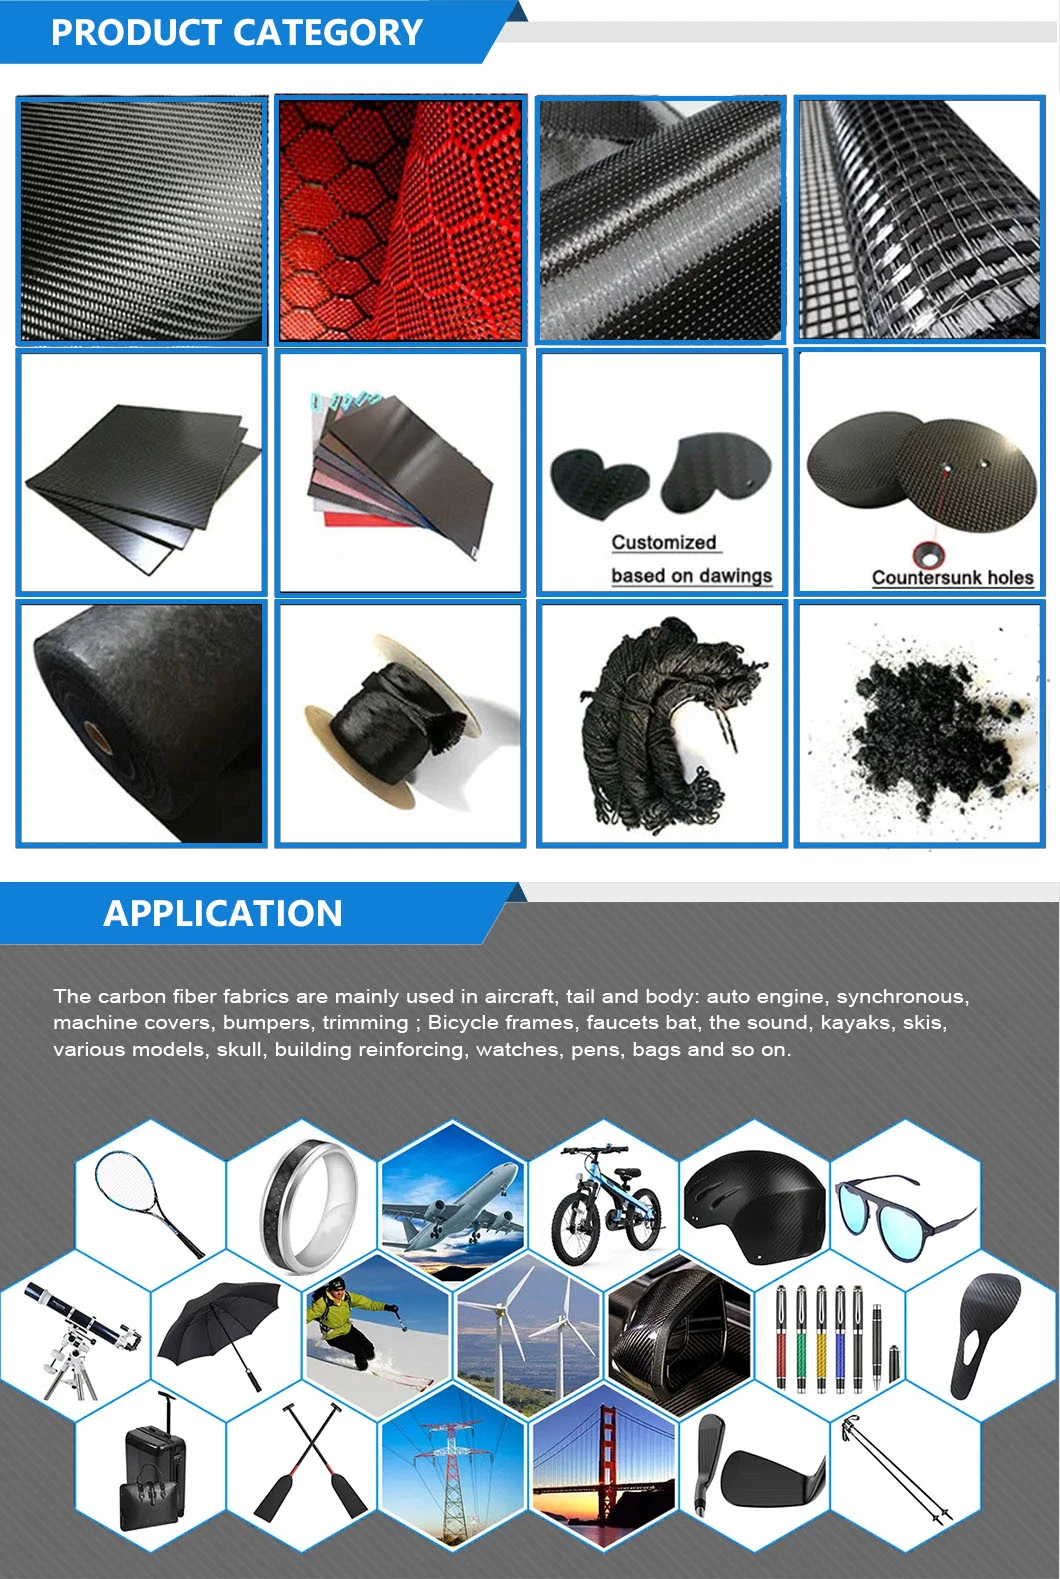 1K 3K 6K 12K Unidirectional/Bi-Directional Plain/Twill/Multiaxial/Ud/CNC/Prepreg/Jacquard Carbon Fiber Fabric Cloth for Bicycles, Helmet, Surfboard